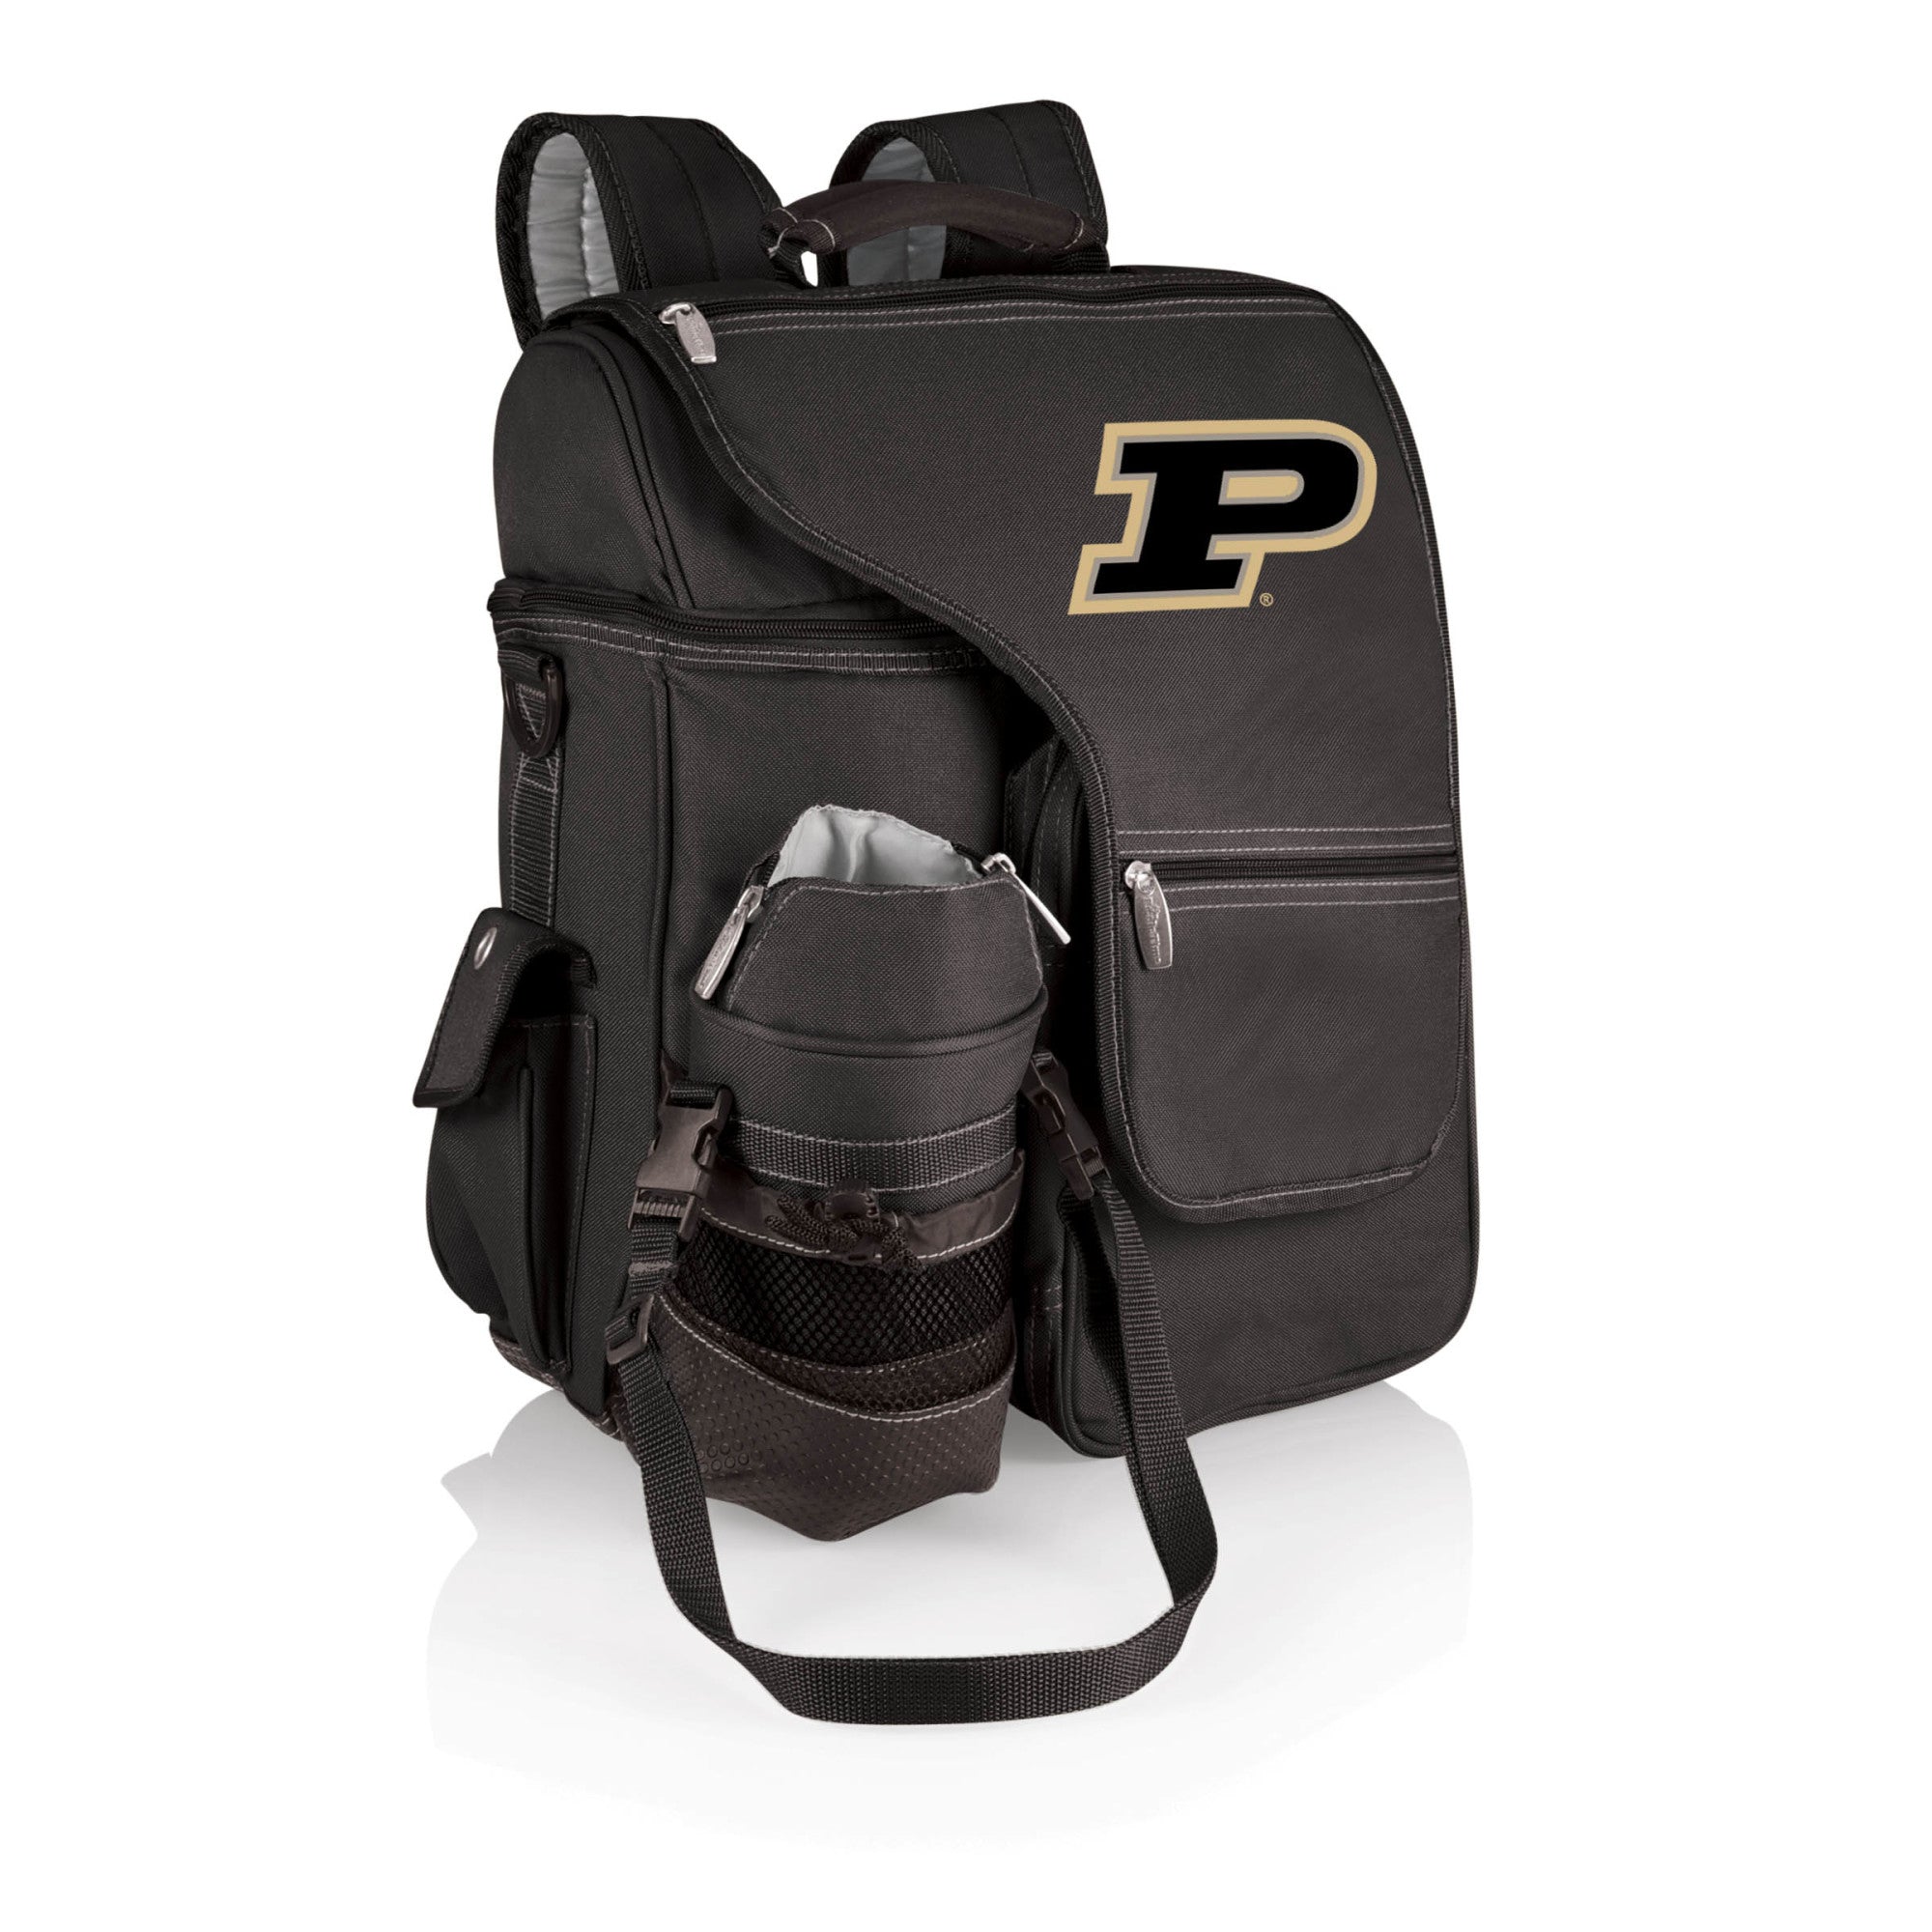 Purdue Boilermakers - Turismo Travel Backpack Cooler, (Black)